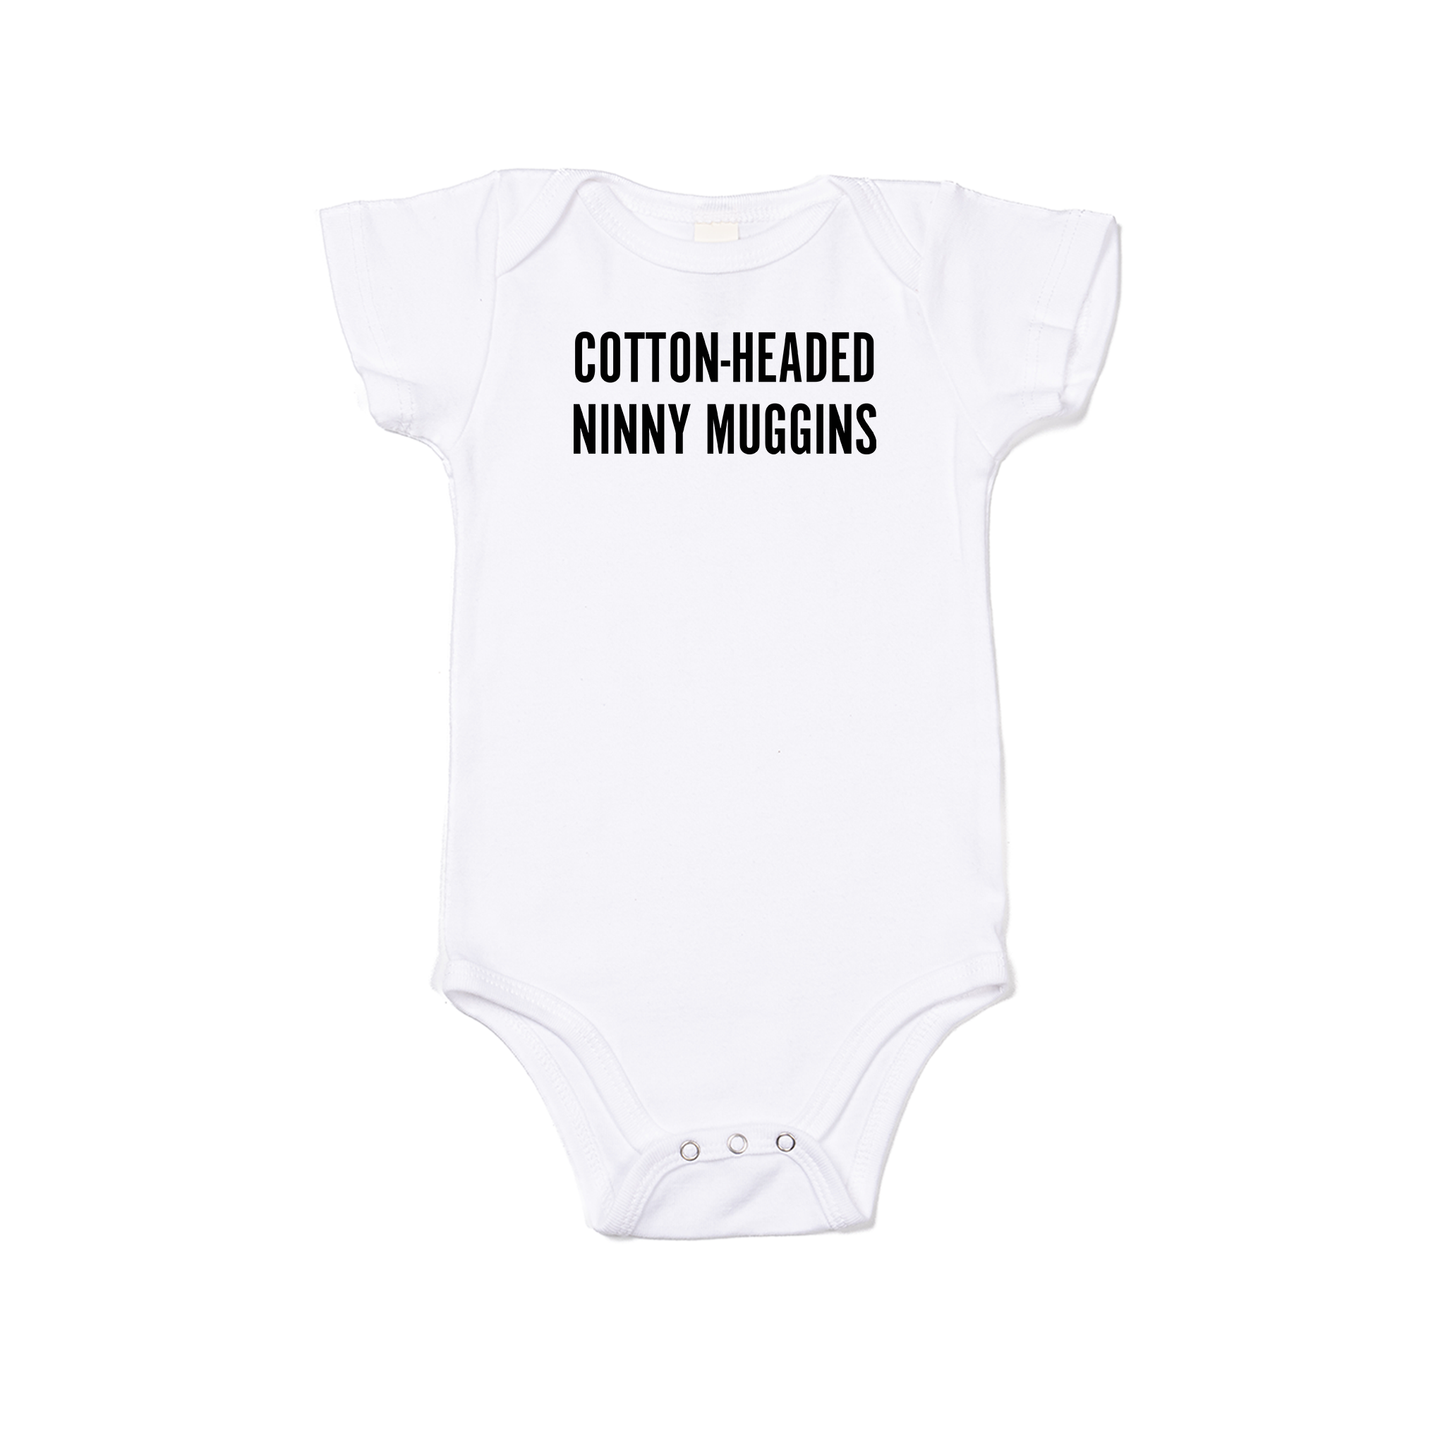 Cotton-Headed Ninny Muggins (Black) - Bodysuit (White, Short Sleeve)